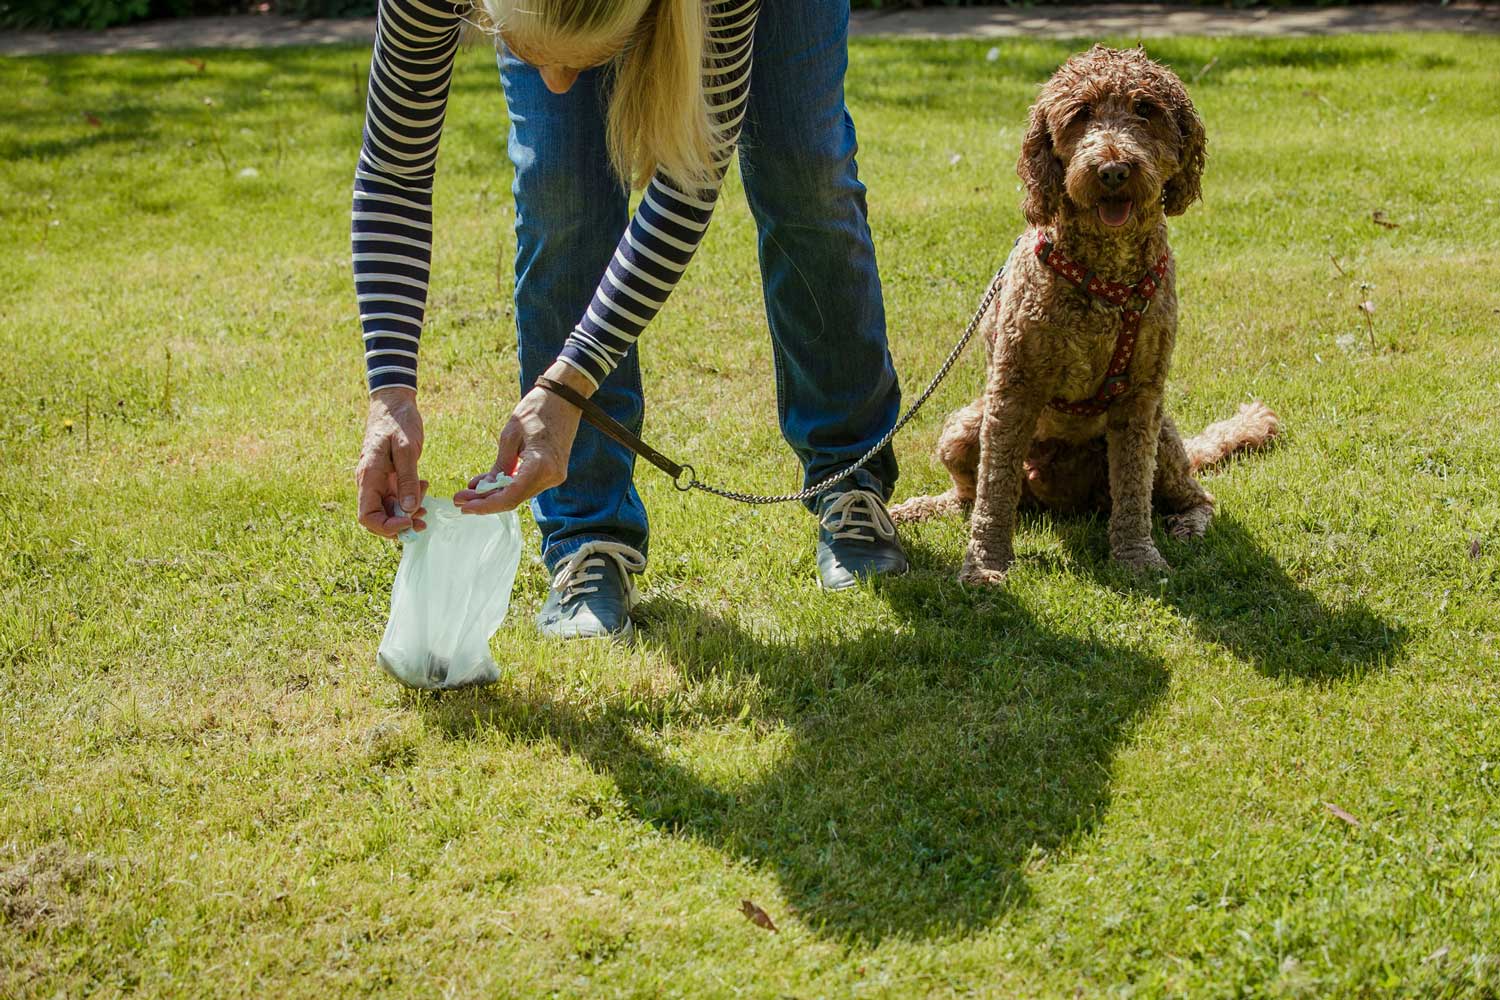 how to clean up lots of dog poop in yard